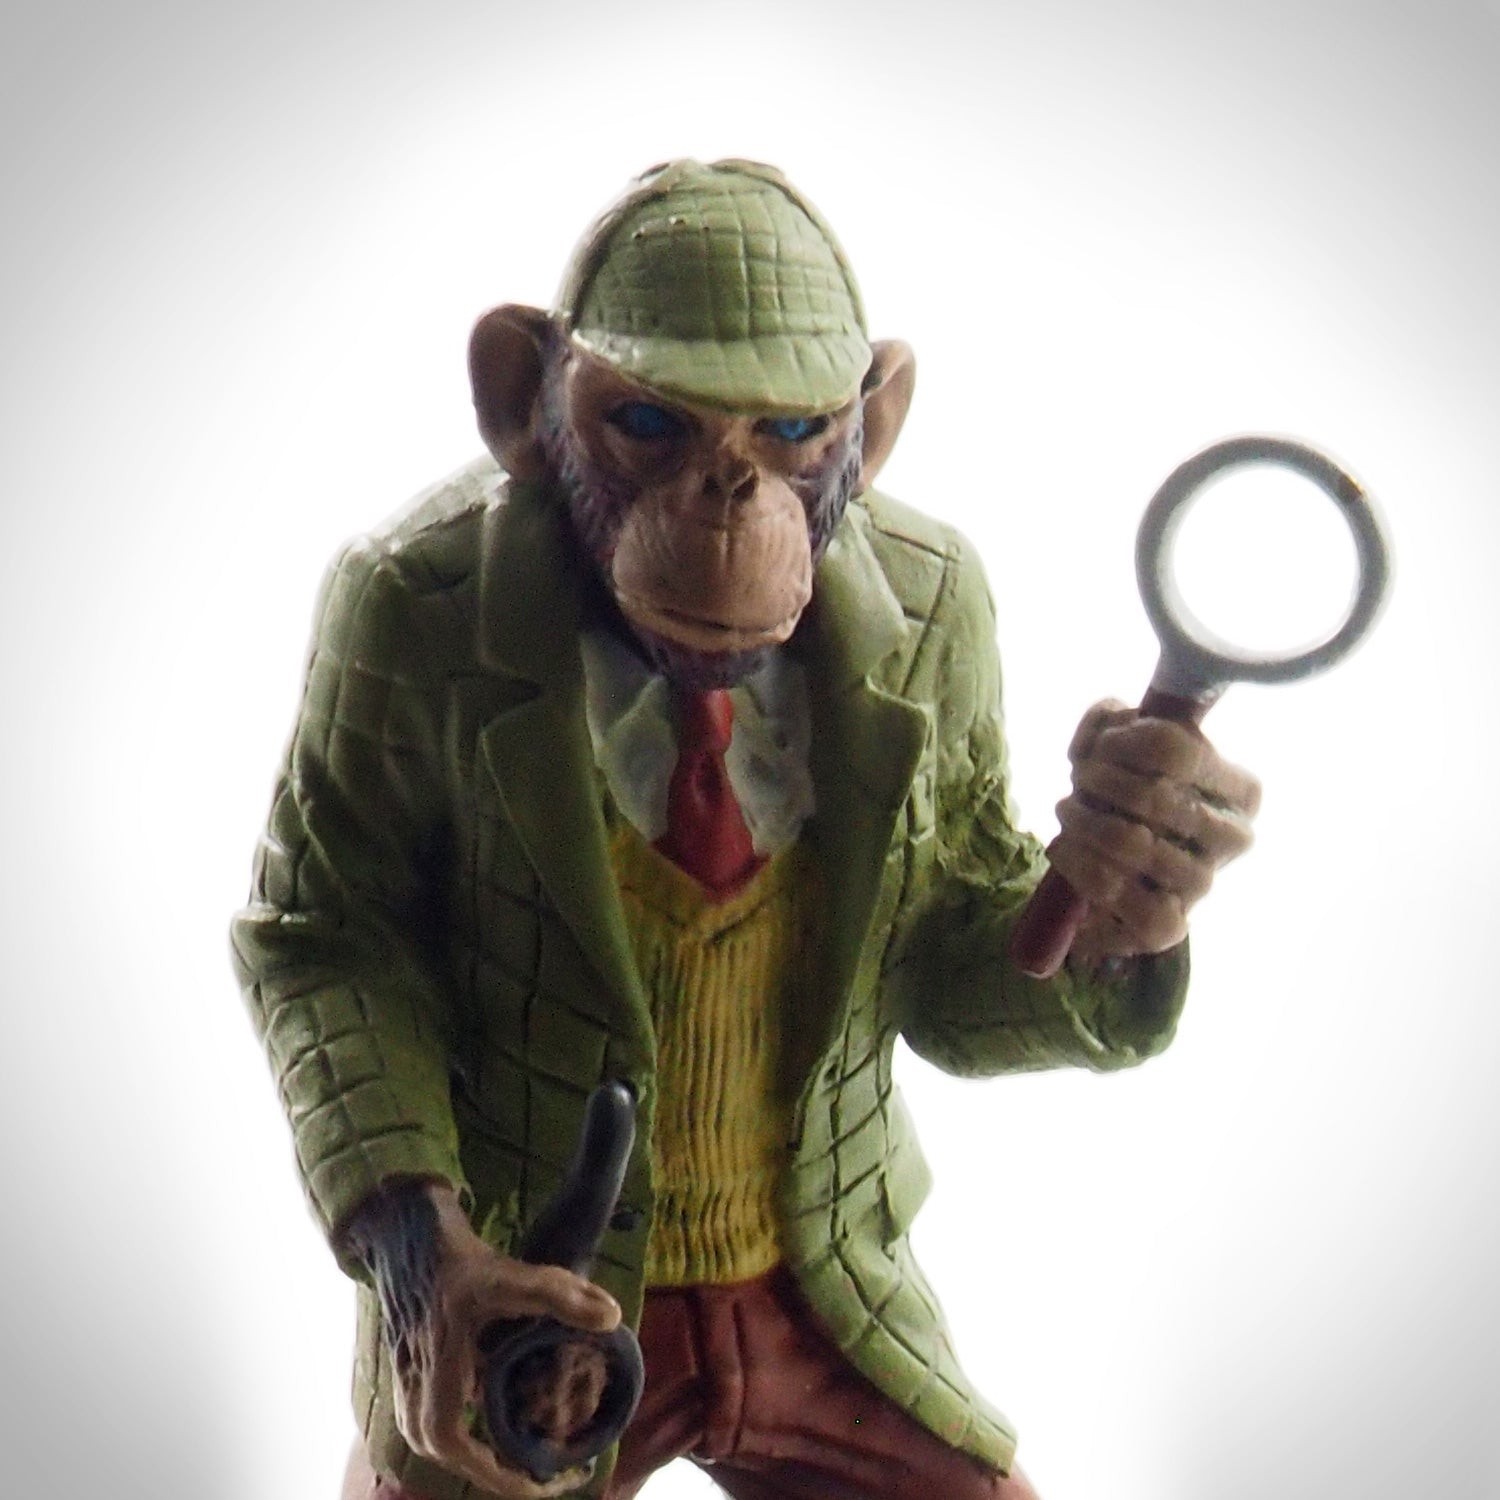 lego batman 3 detective chimp